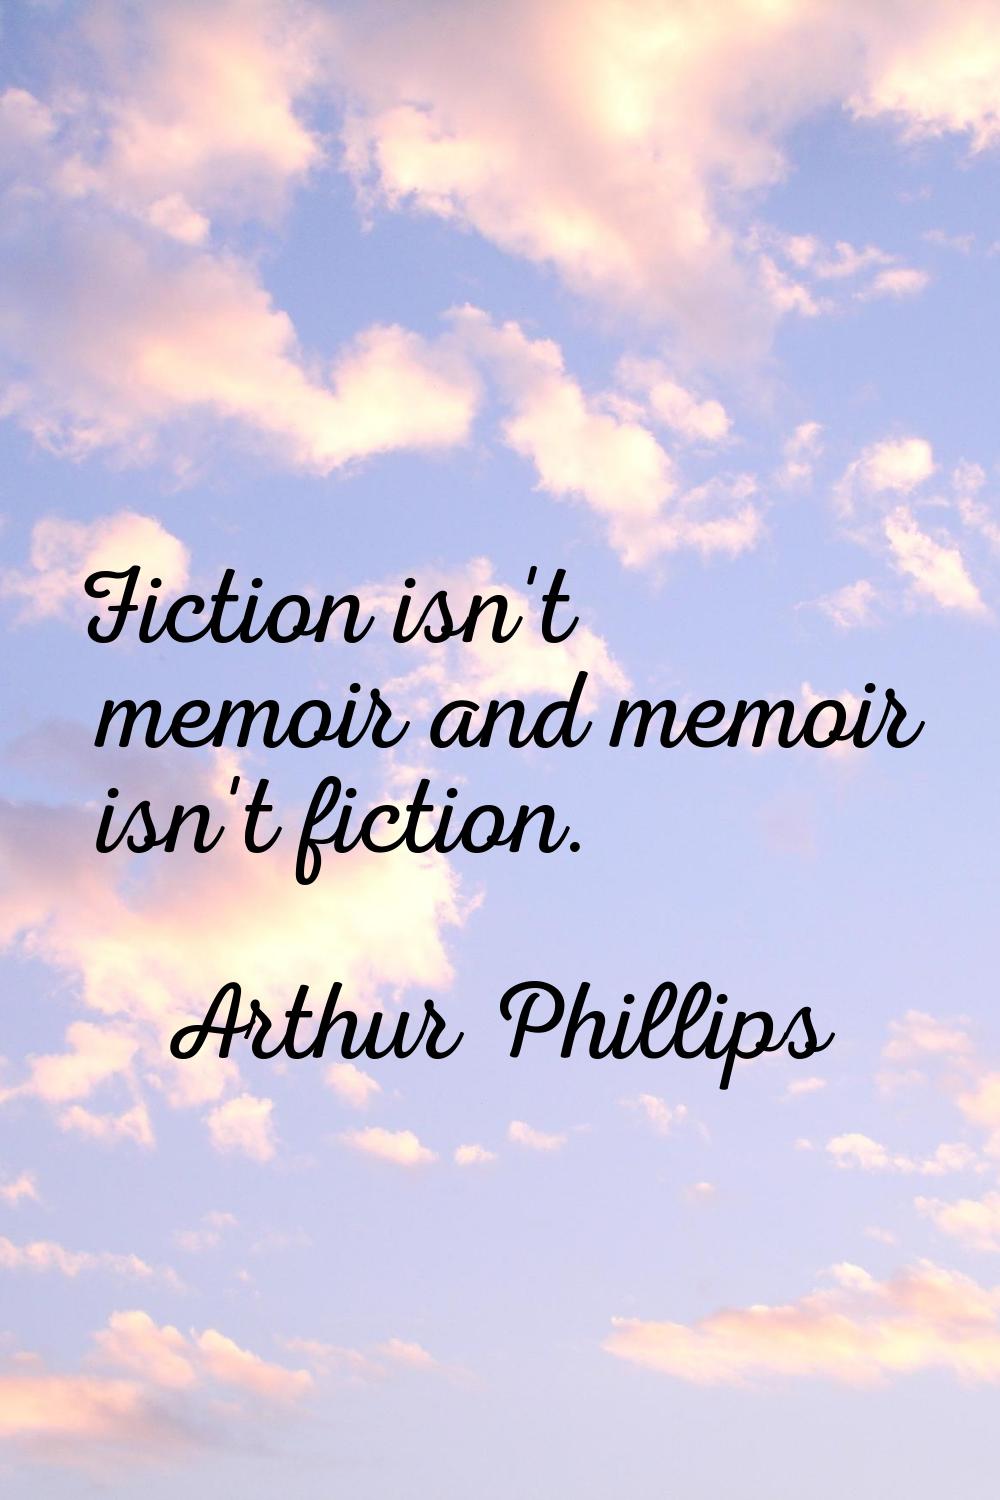 Fiction isn't memoir and memoir isn't fiction.